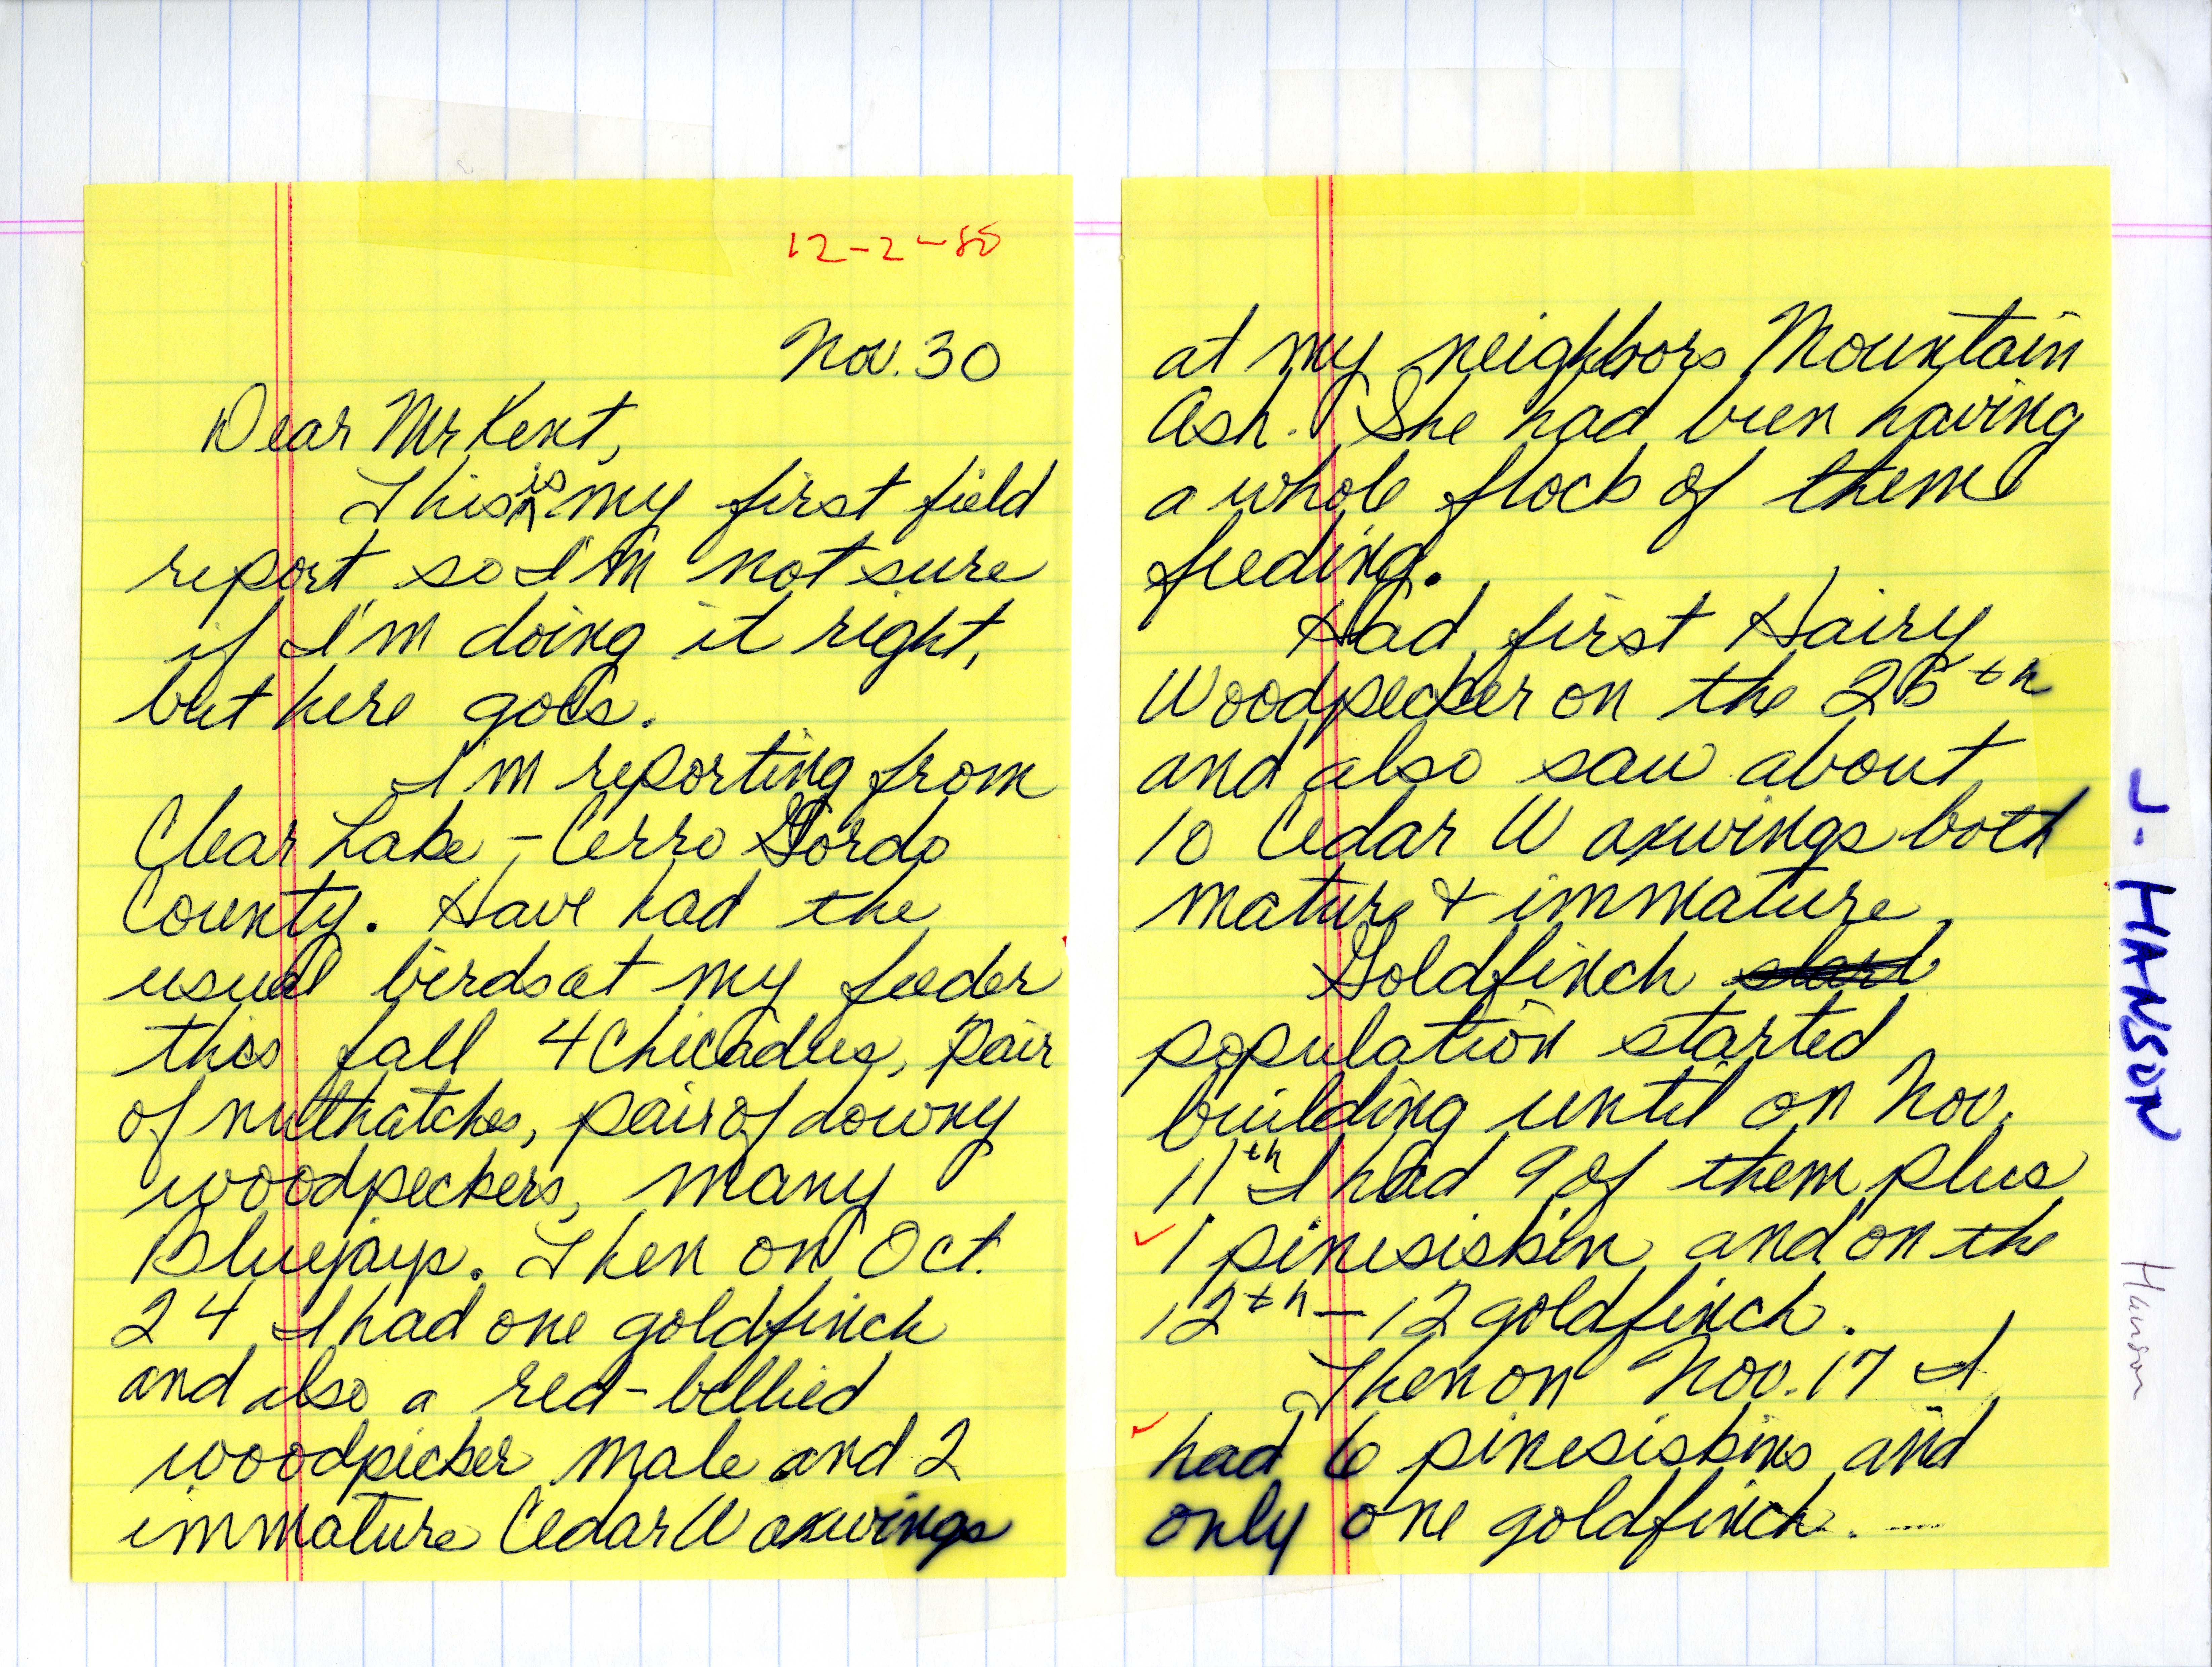 Carol Hanson letter to Thomas Kent regarding birds sighted, November 30, 1980